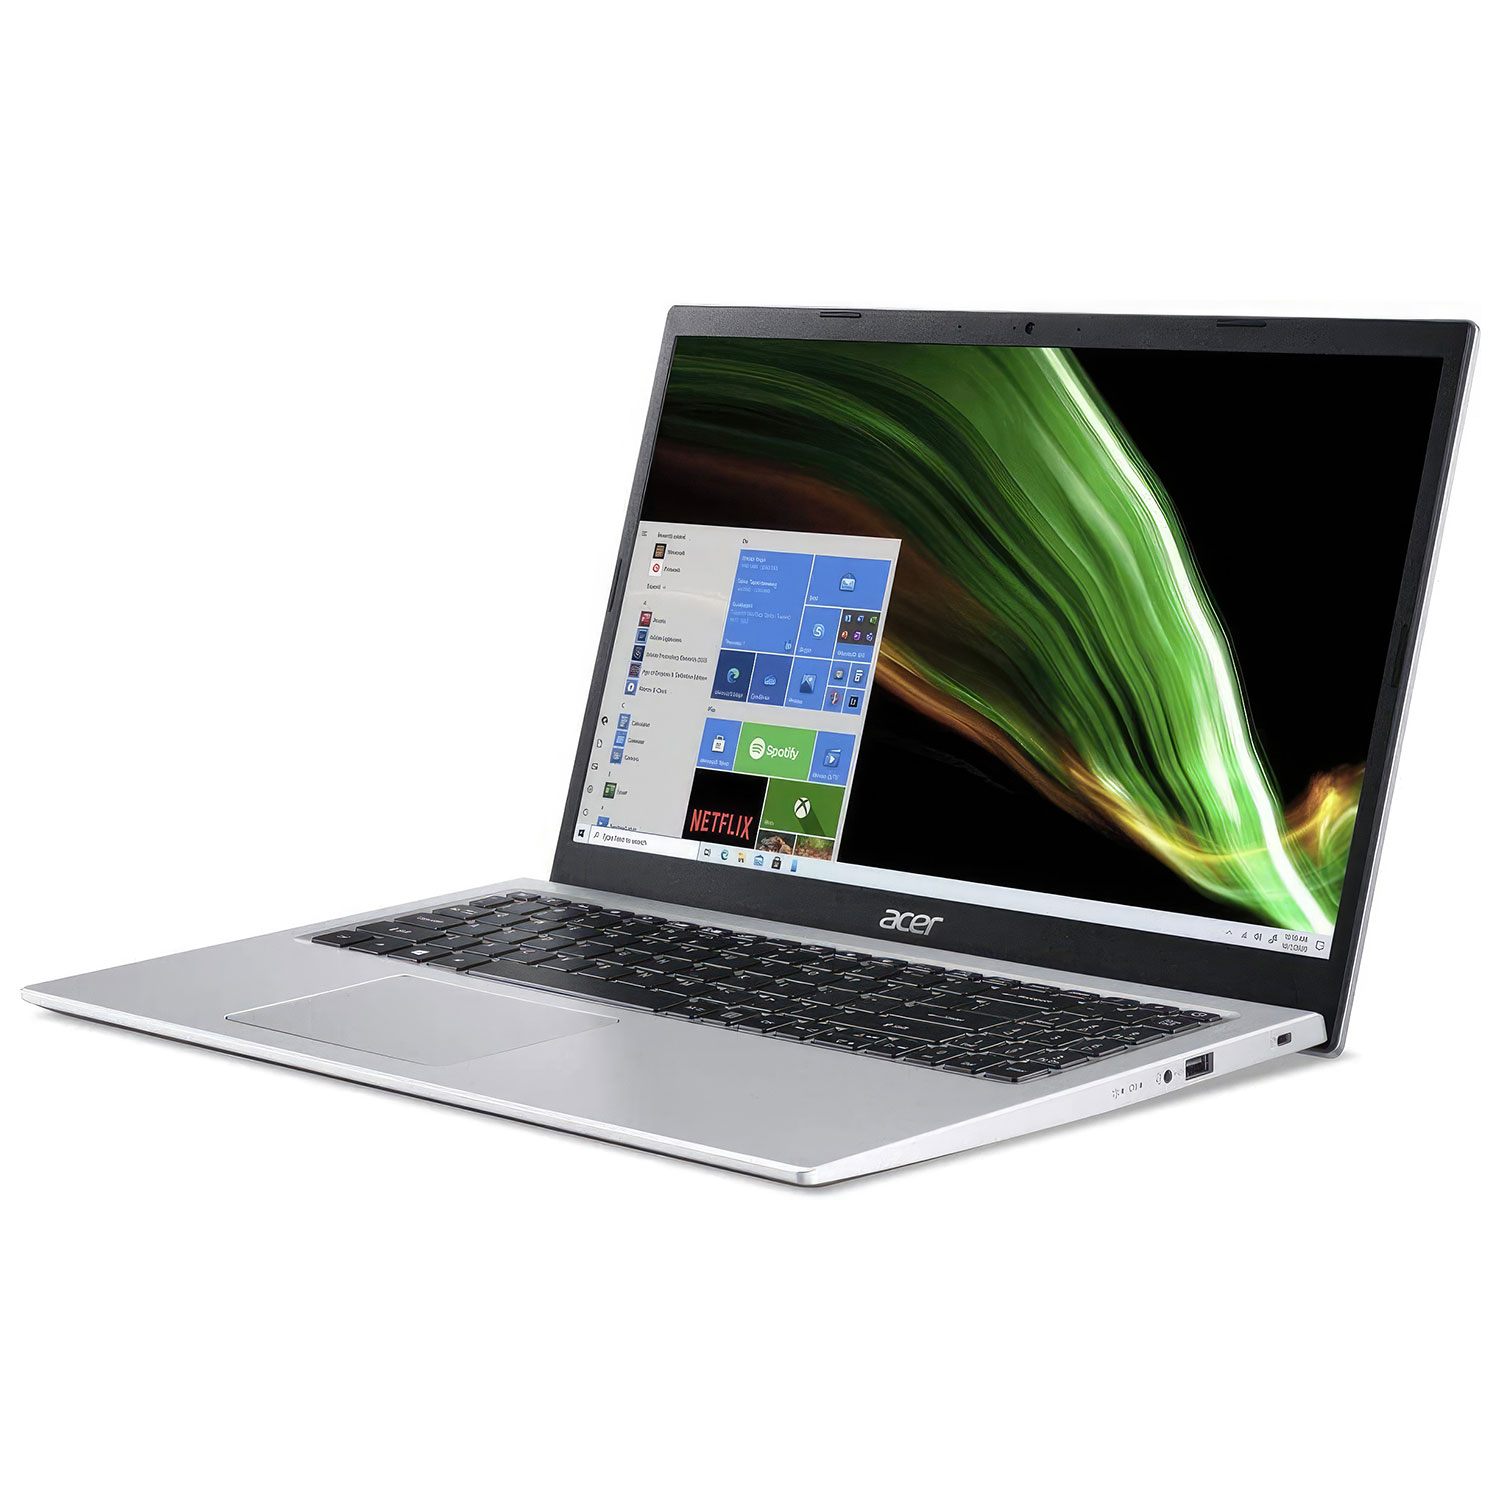 Notebook Acer Aspire 3 - Notebooks - Samambaia Norte (Samambaia